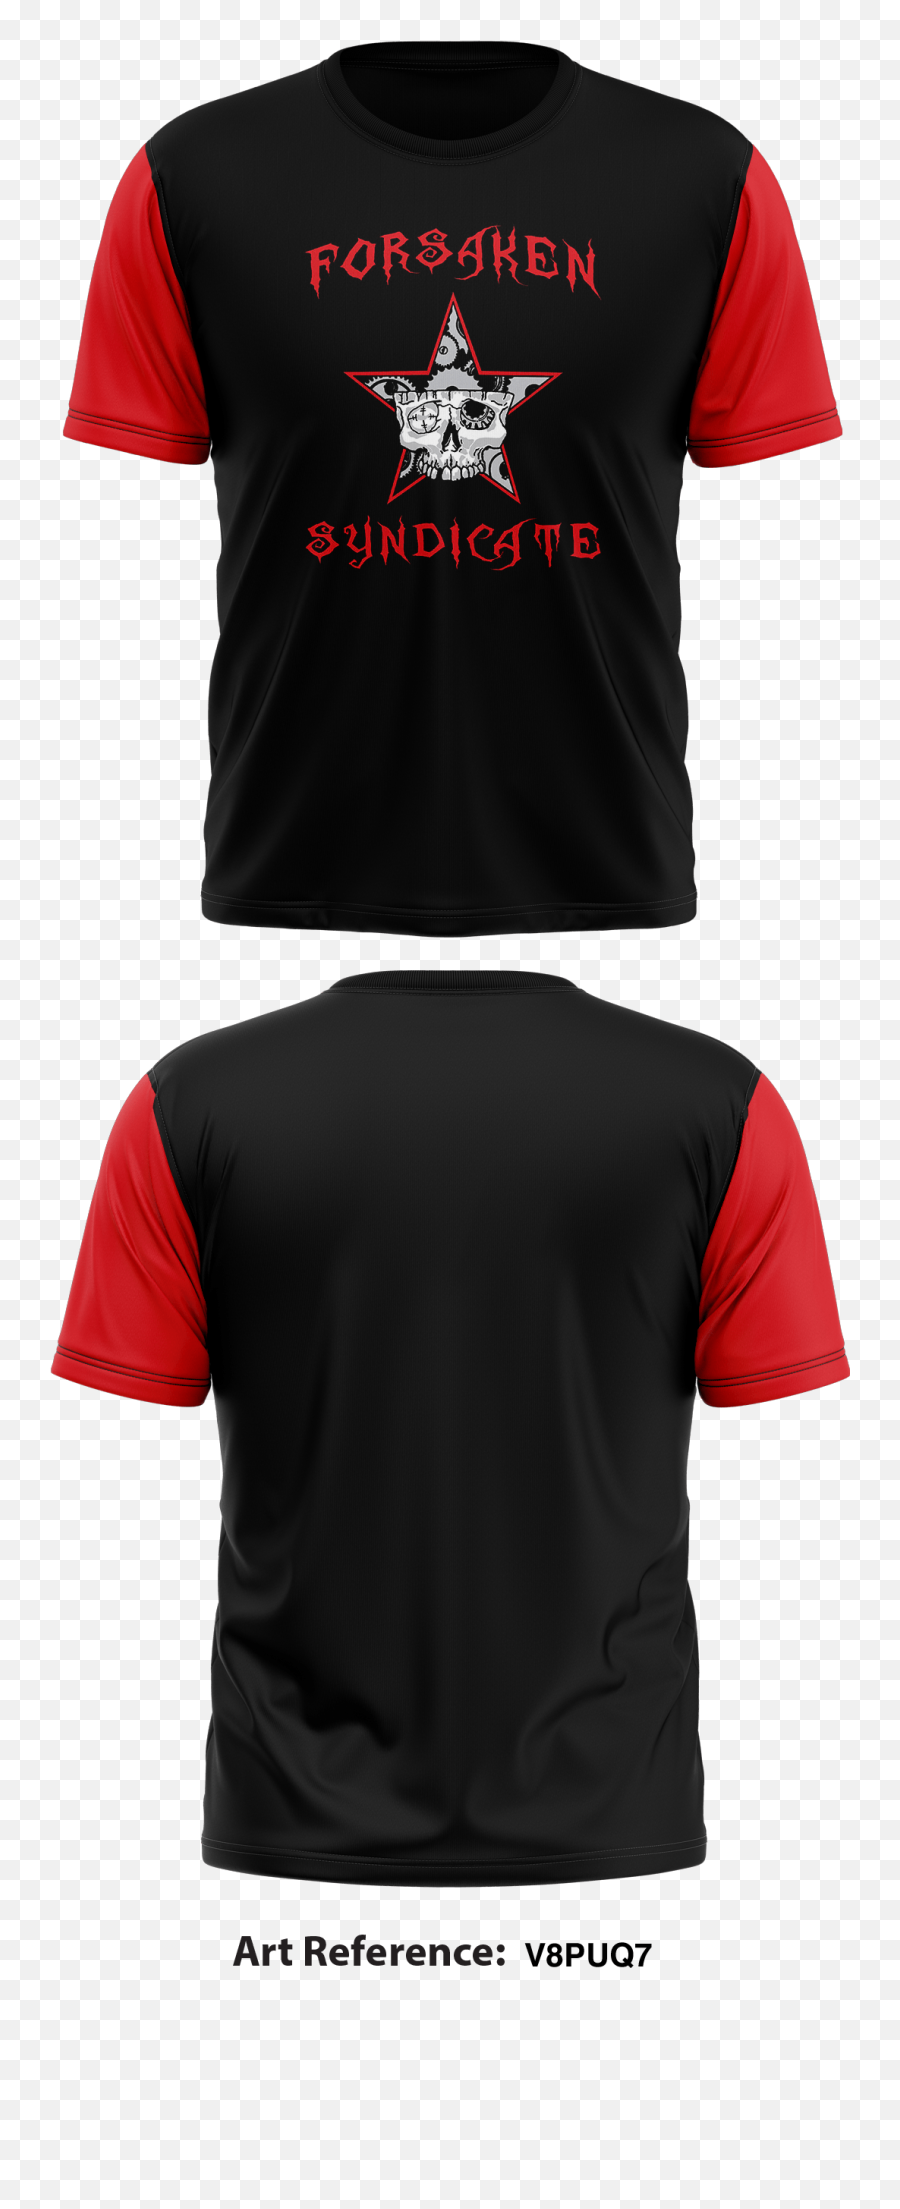 Forsaken Syndicate Store 1 Short Sleeve Hybrid Performance Shirt - V8puq7 Emoji,Syndicate Logo